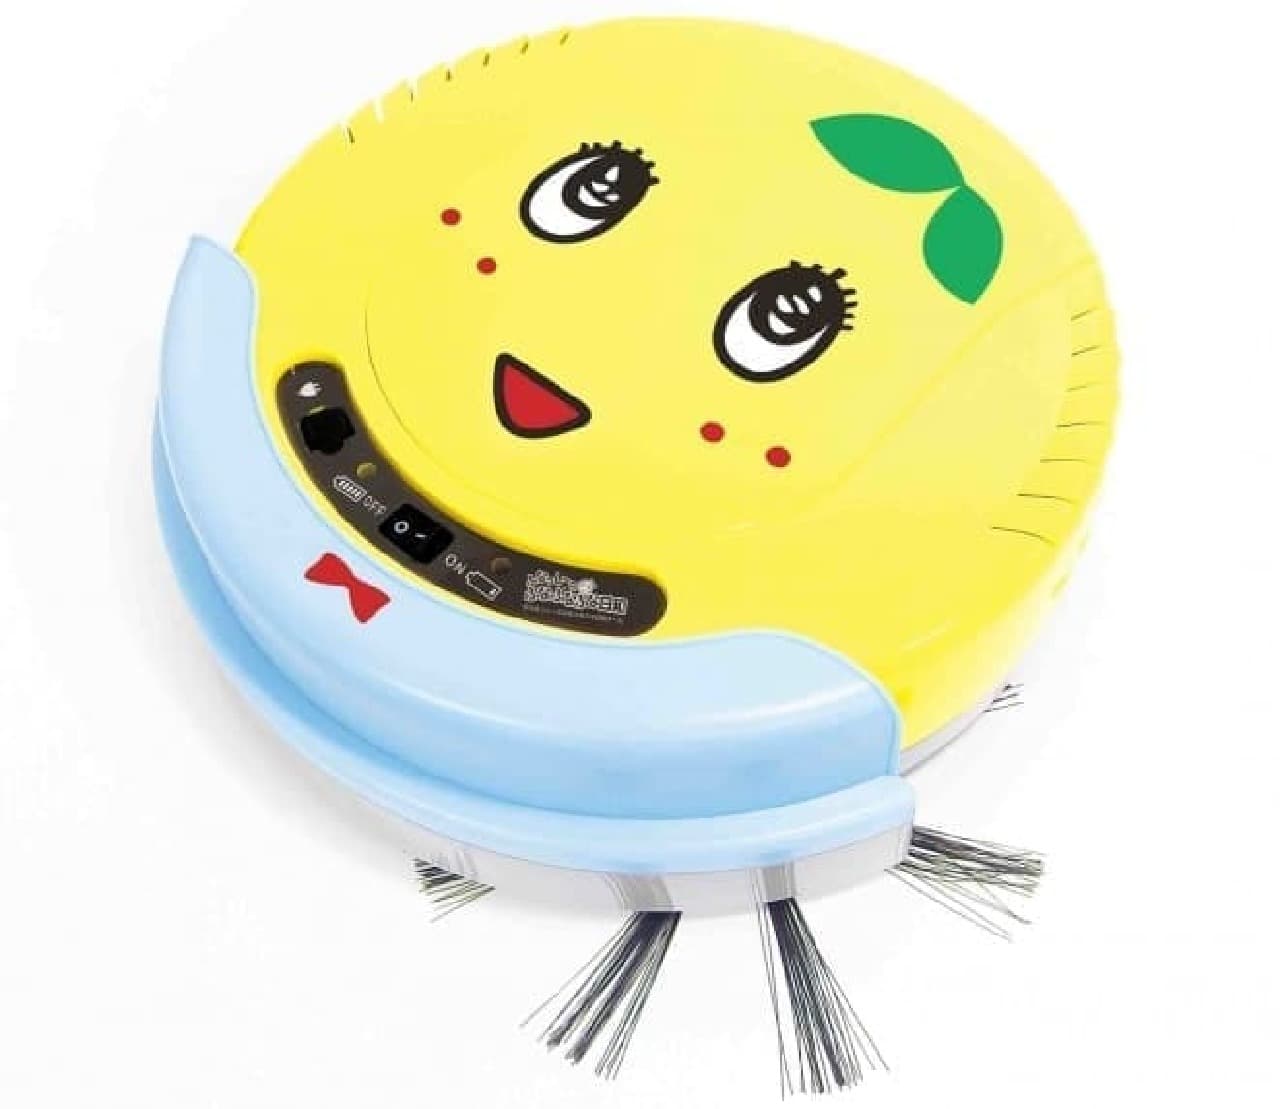 "Funa Hiyori Funassyi Robot Cleaner" is now on sale